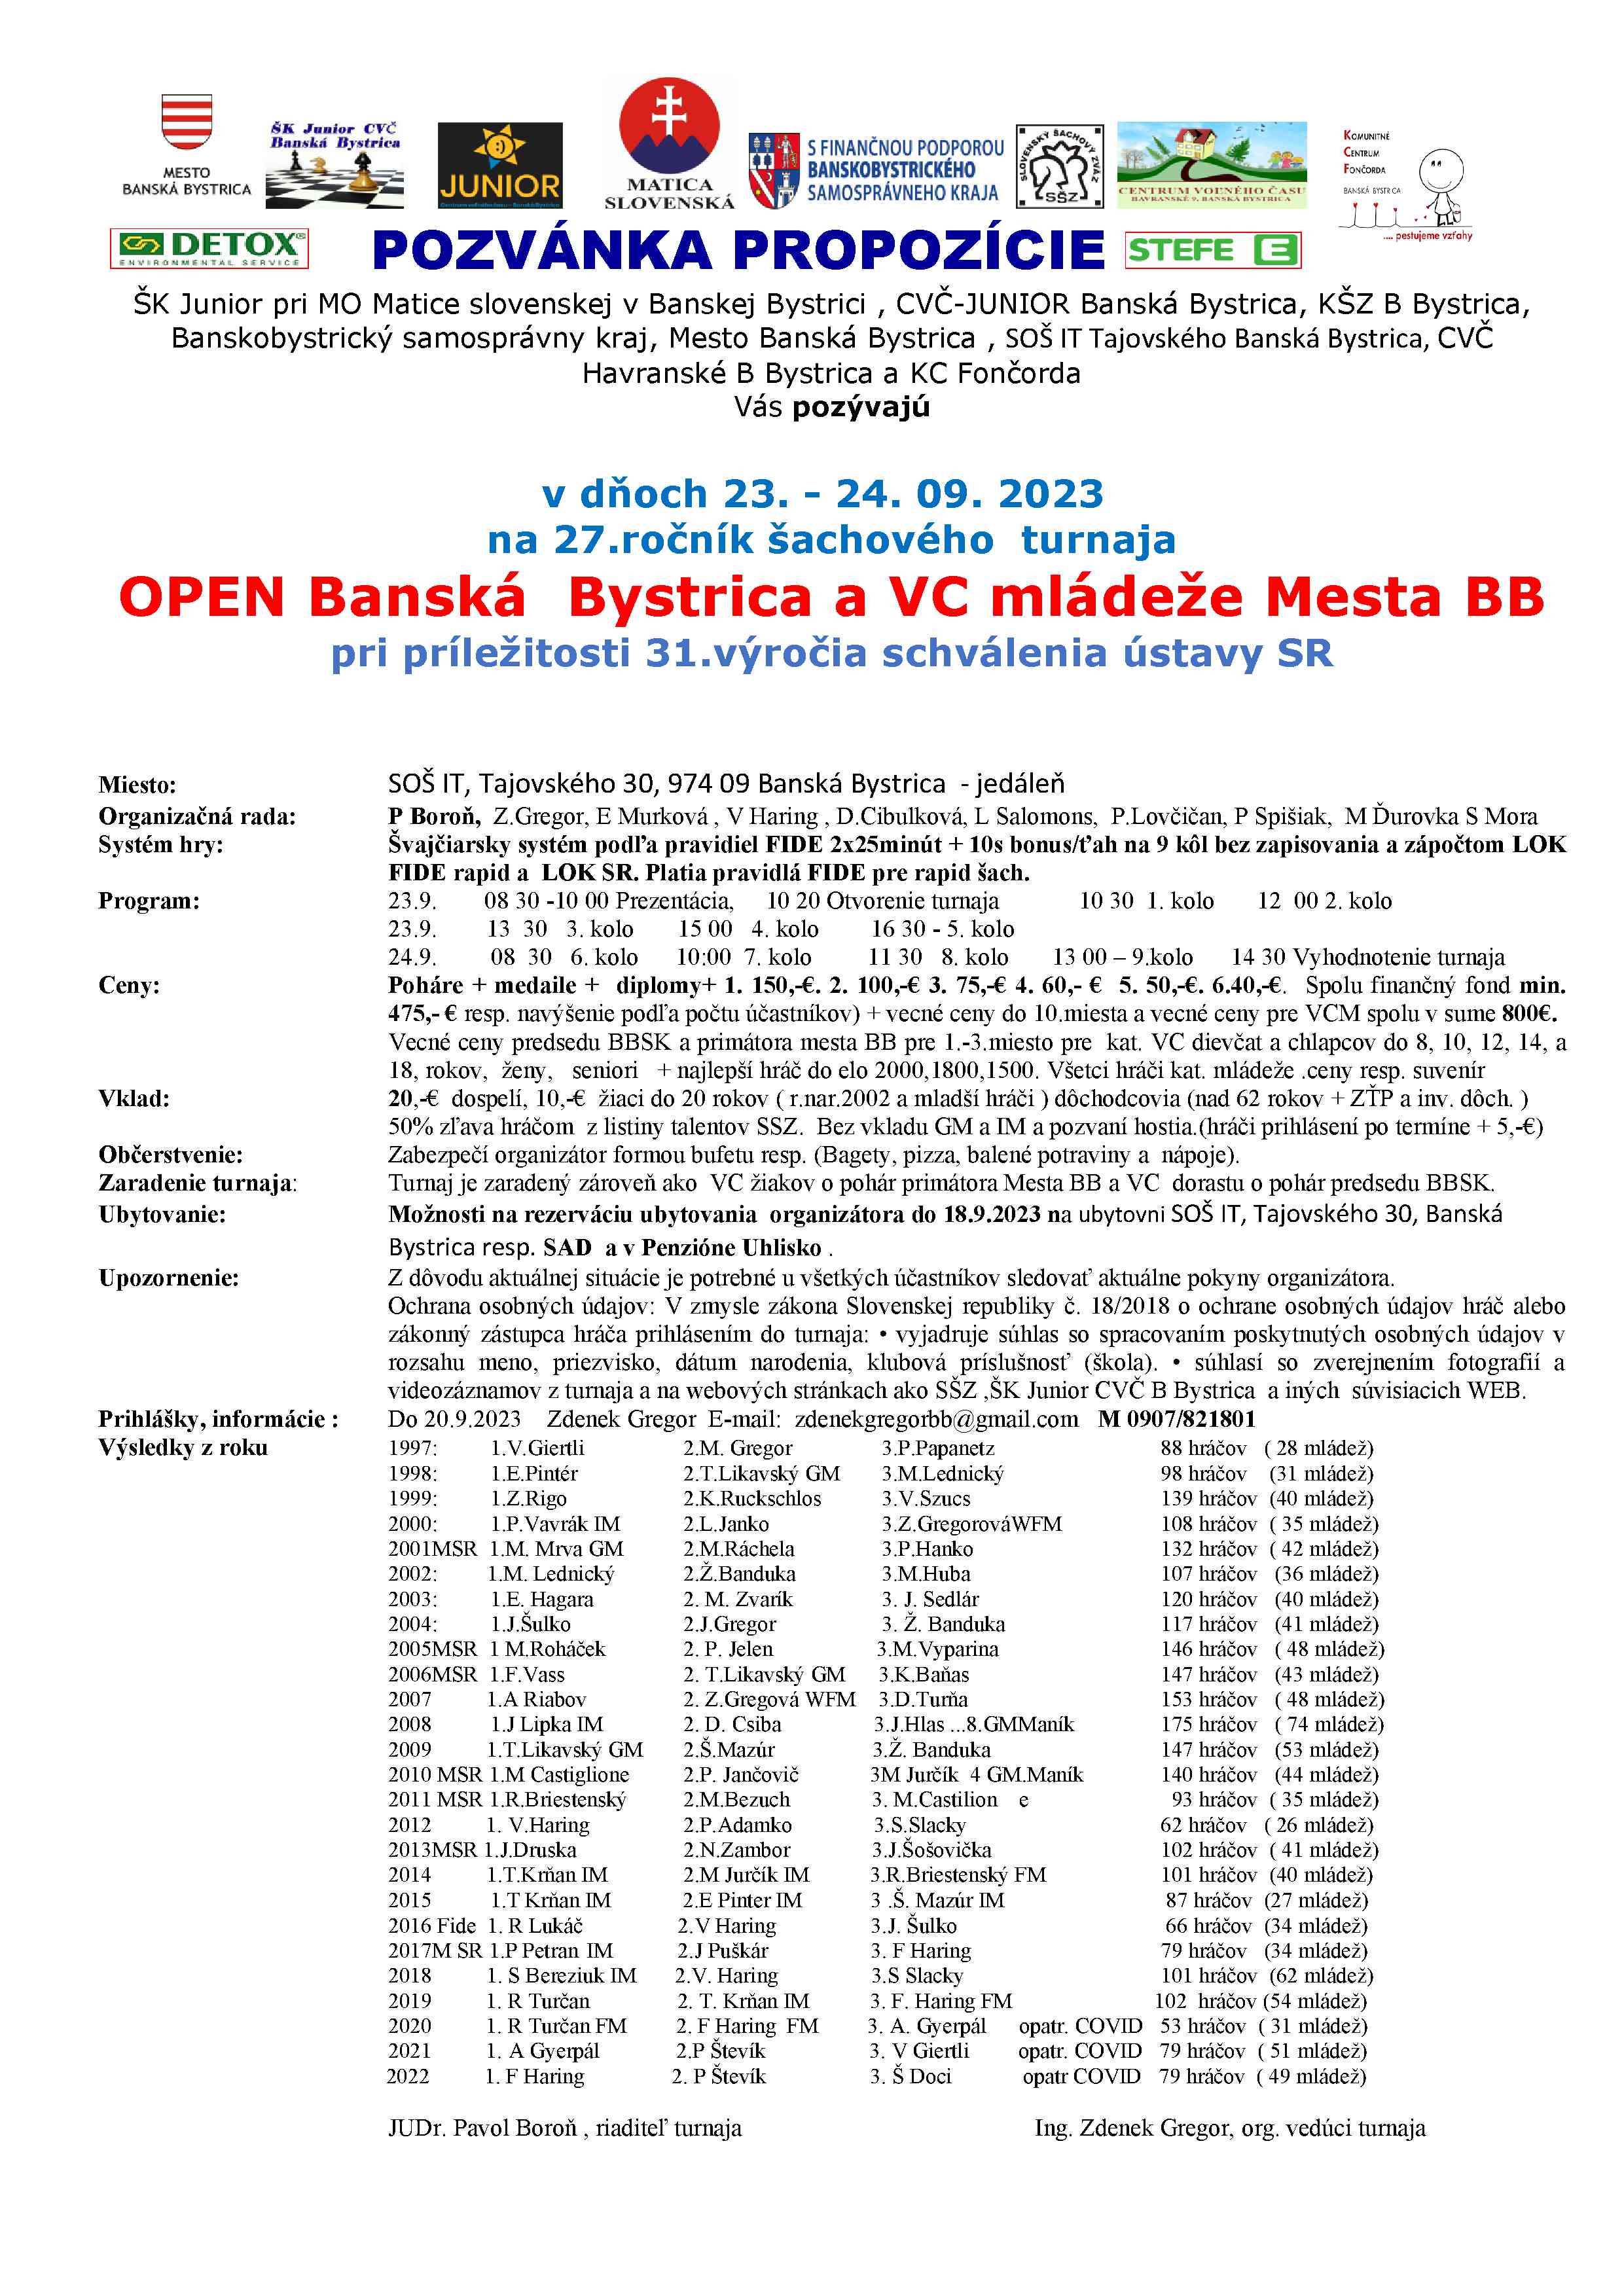 open__bbystrica_2023-rapid-a_vc_mldee-bb1.jpg